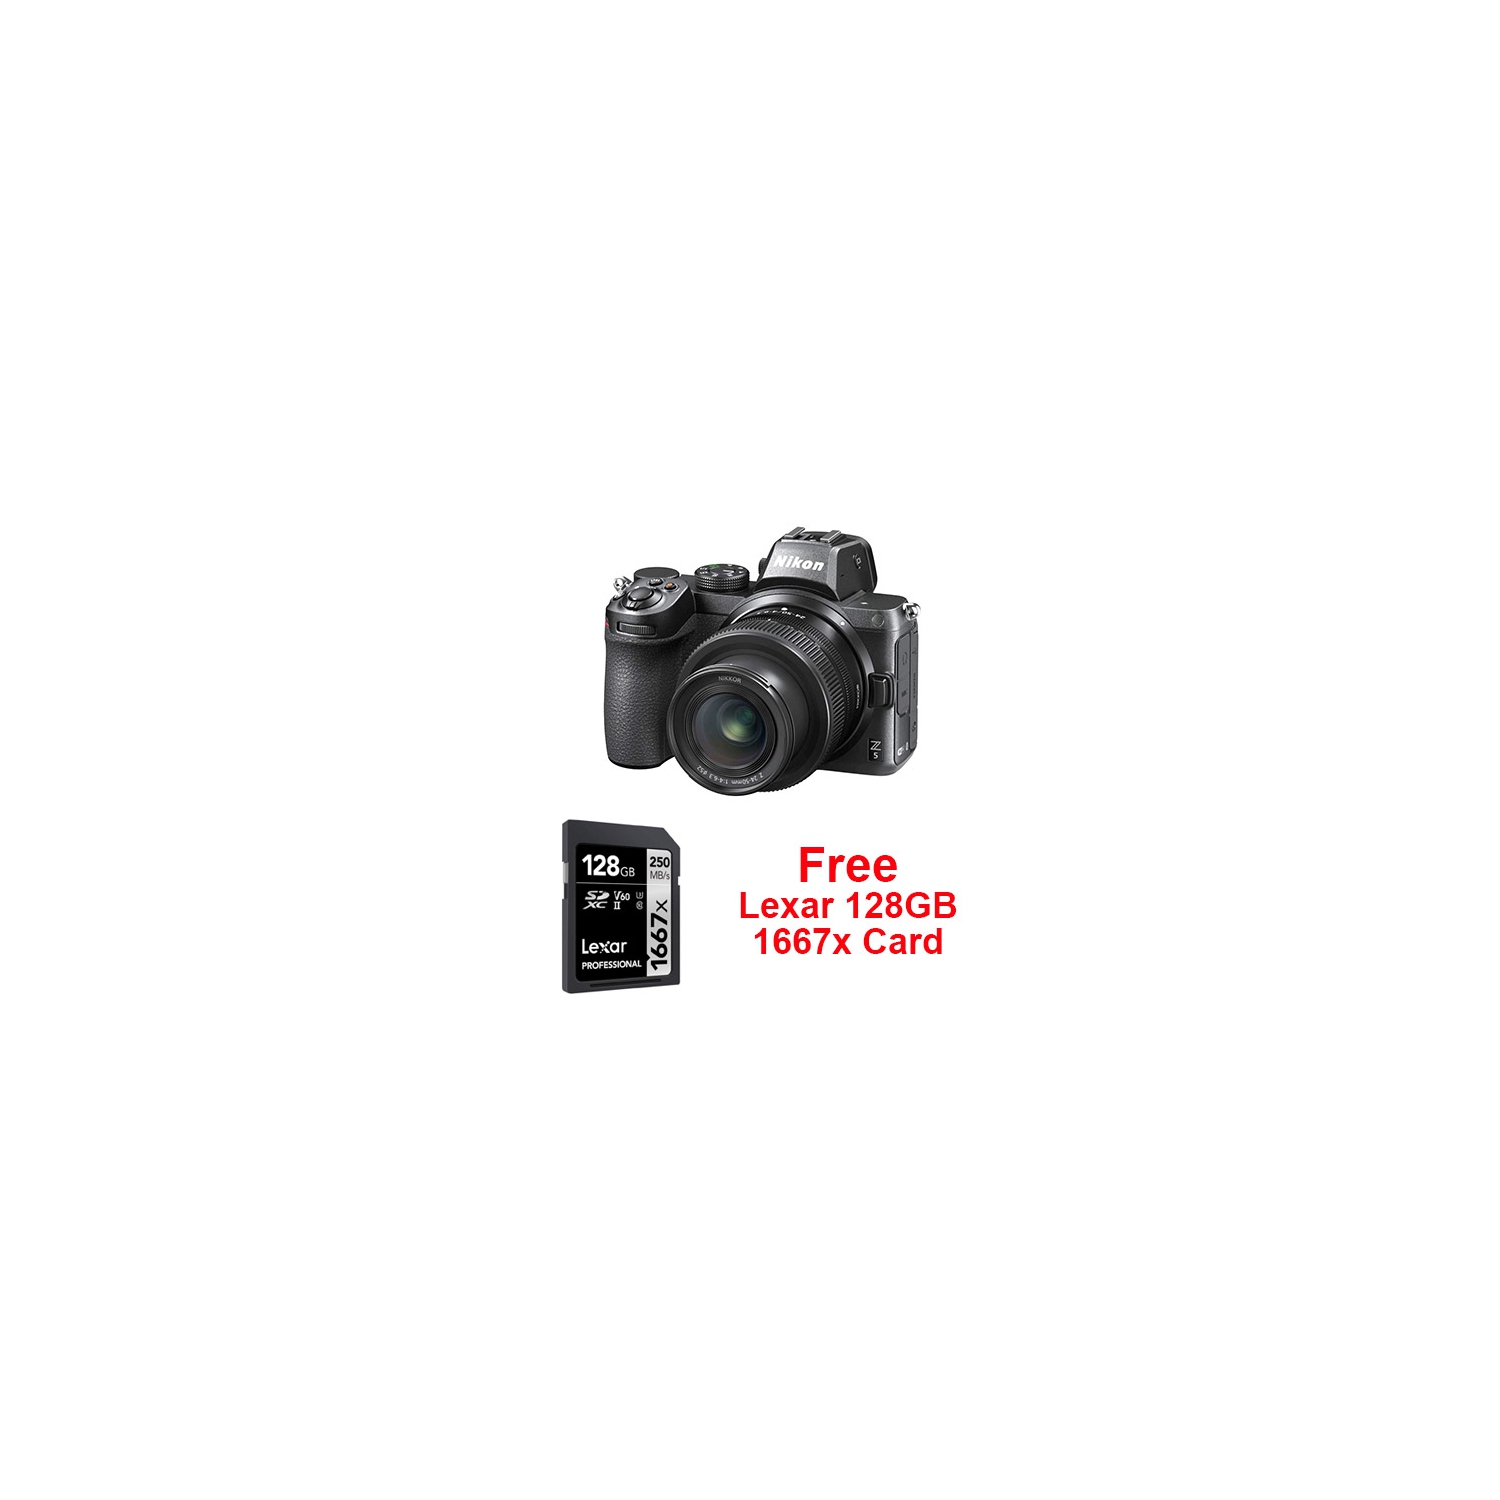 Nikon Z5 Camera with 24-50mm f4.6.3 + 128GB 1667x Lexar Pro Card